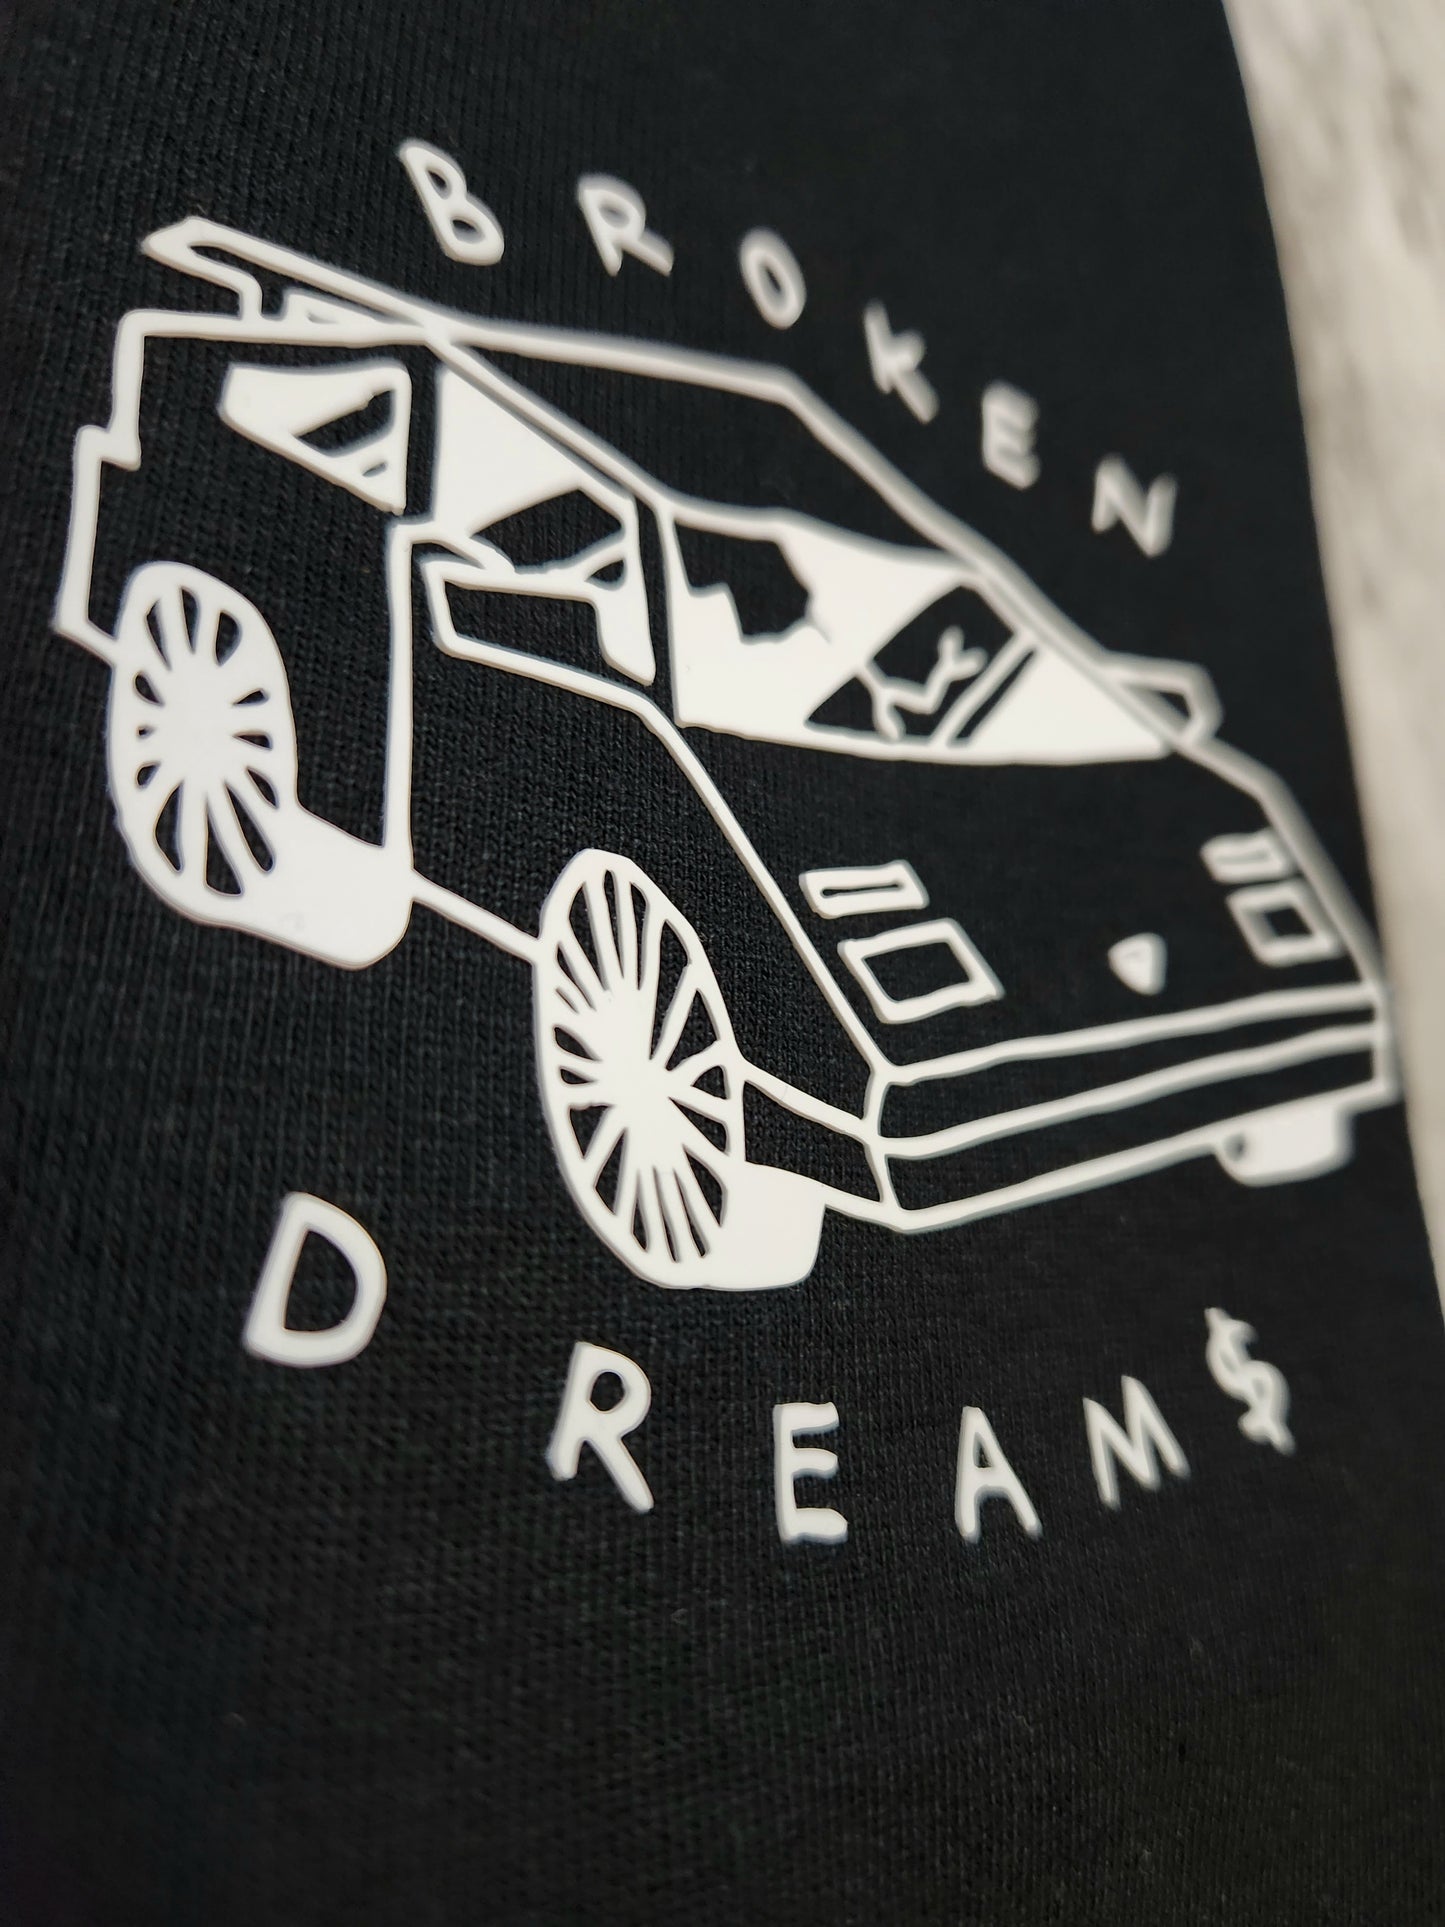 Broken Dreams T-Shirt (Black)